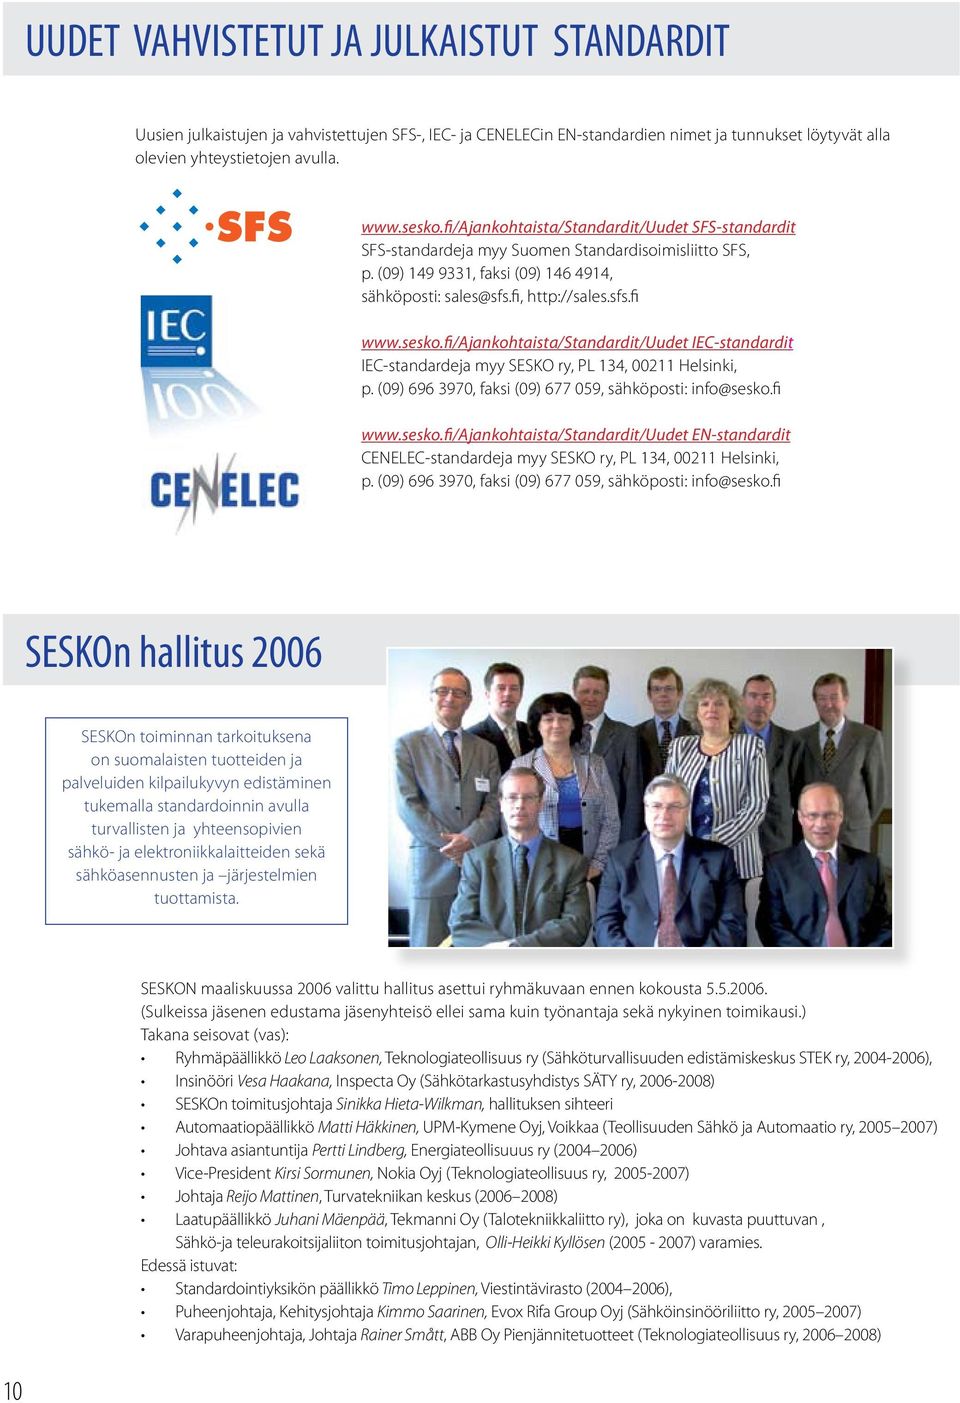 fi/ajankohtaista/standardit/uudet IEC-standardit IEC-standardeja myy SESKO ry, PL 134, 00211 Helsinki, p. (09) 696 3970, faksi (09) 677 059, sähköposti: info@sesko.